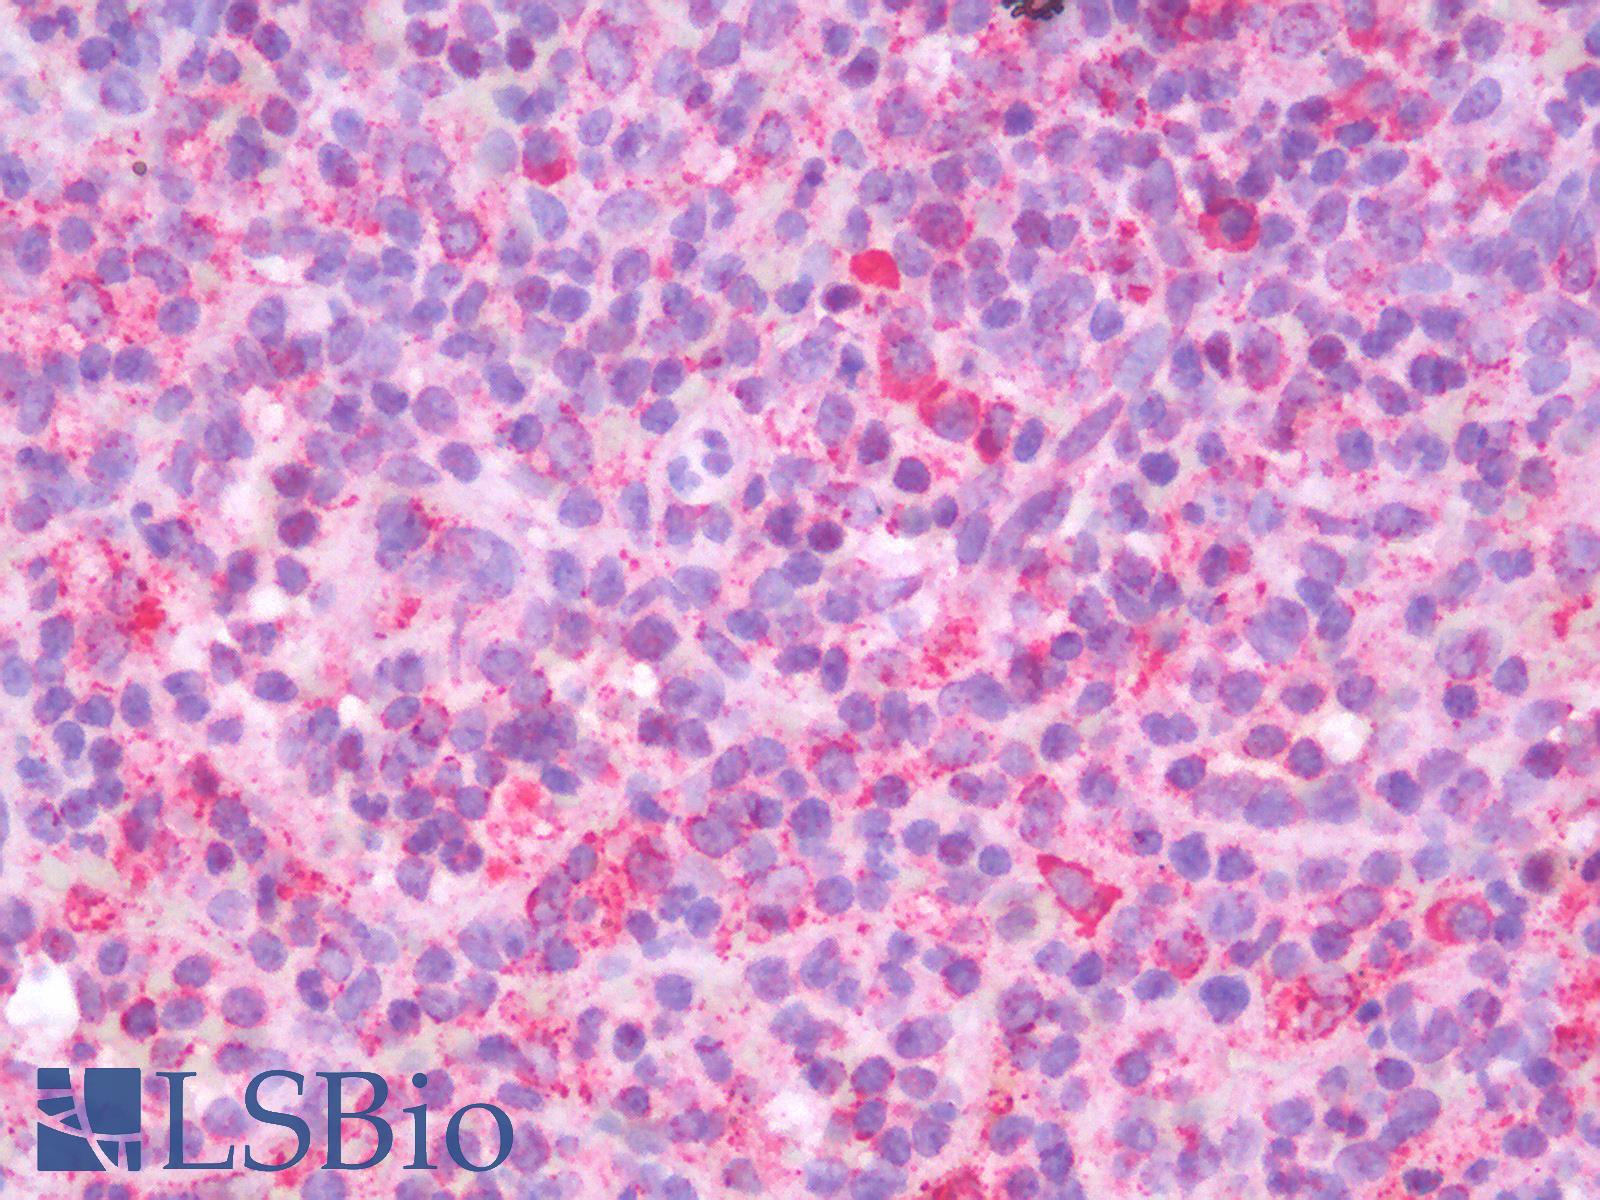 HSPA5 / GRP78 / BiP Antibody - Human Spleen: Formalin-Fixed, Paraffin-Embedded (FFPE)